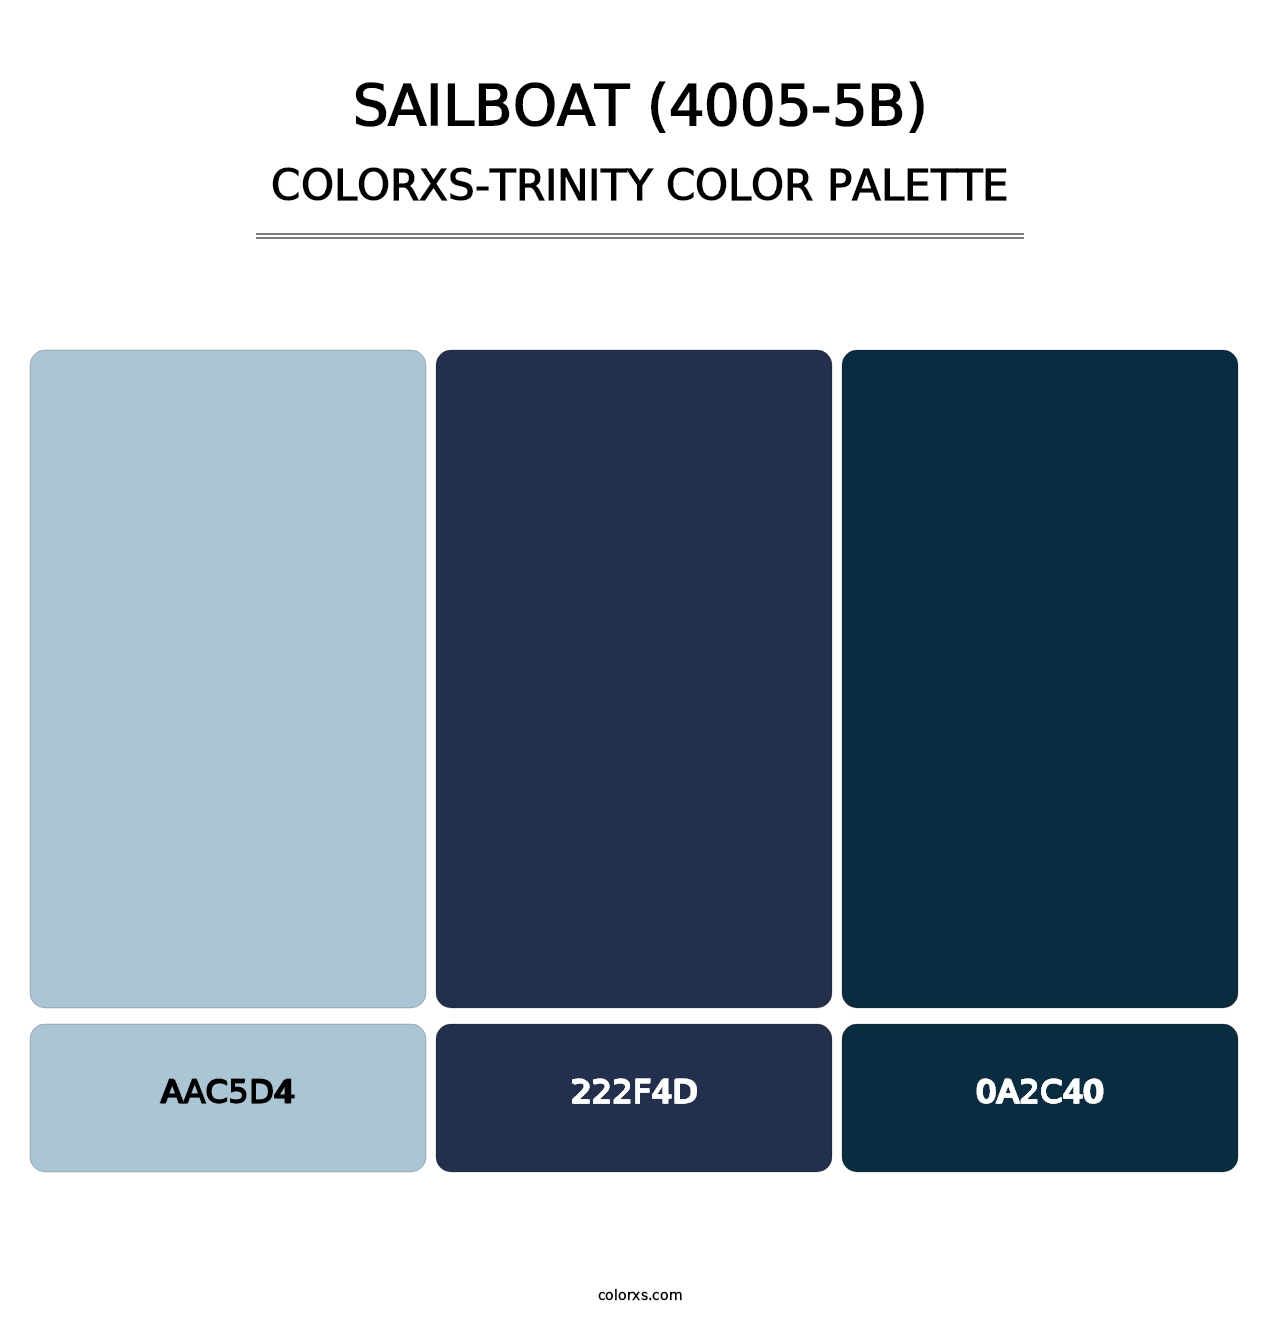 Sailboat (4005-5B) - Colorxs Trinity Palette